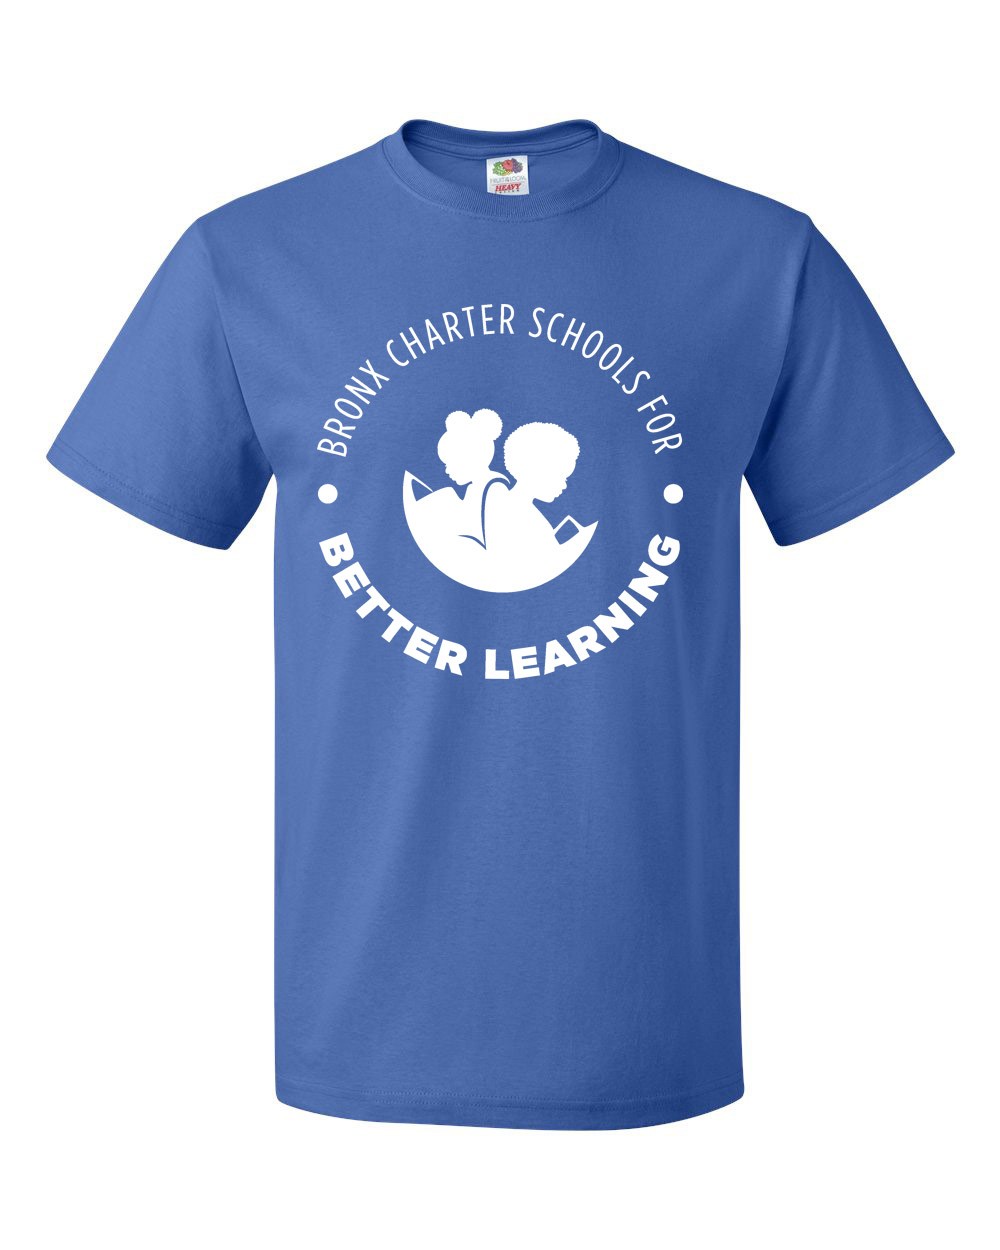 BCBL S/S Royal Gym T-Shirt w/ School Logo *Confirm Color with School